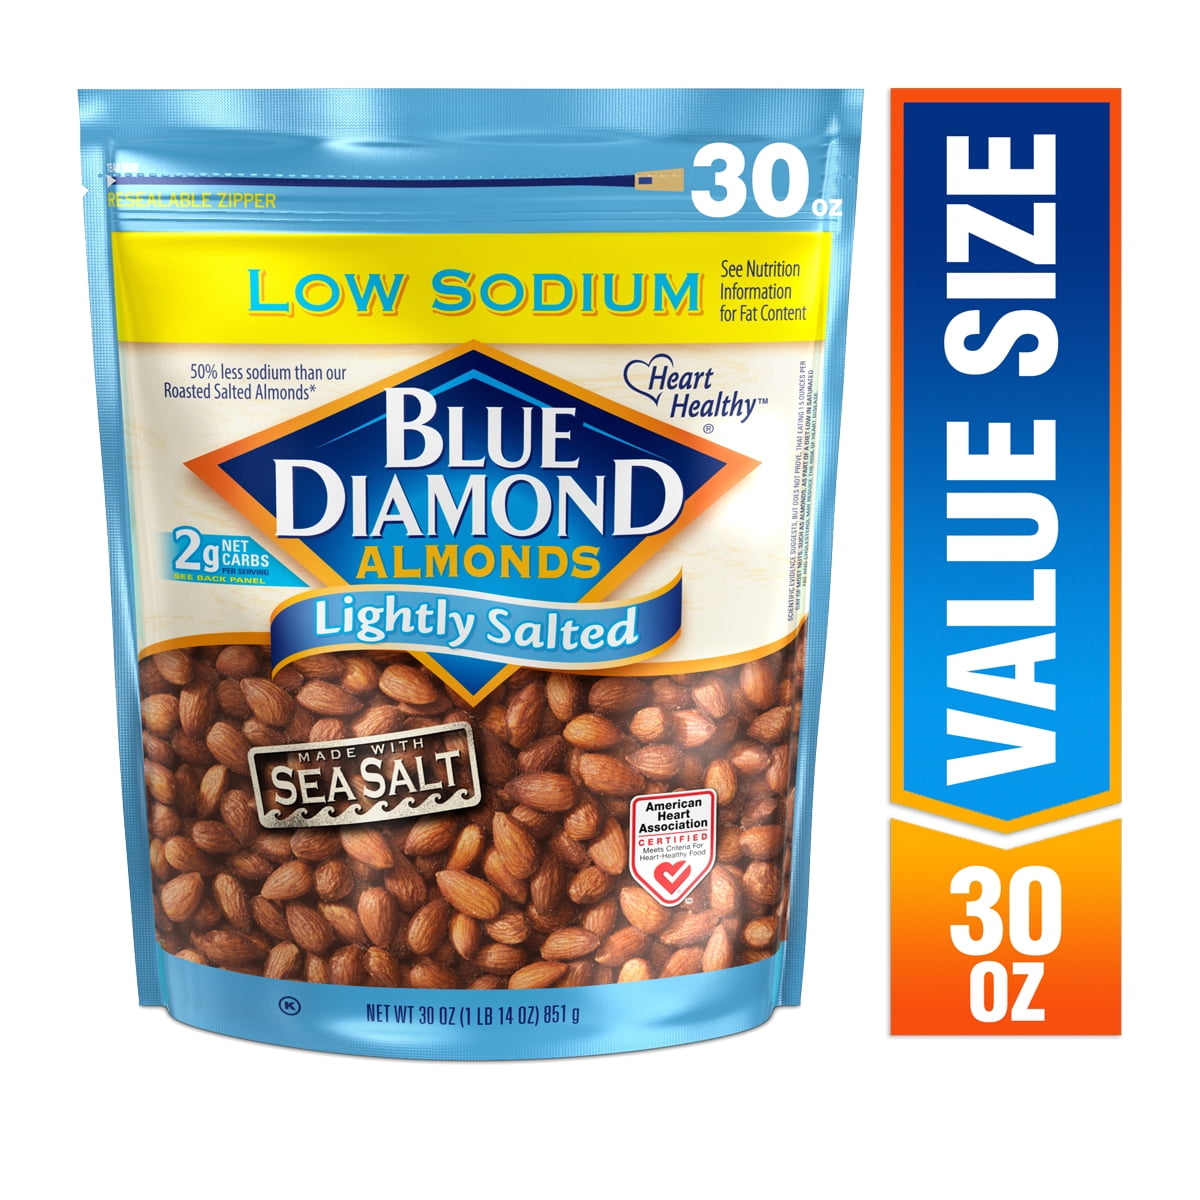 Blue Diamond Almonds Low Sodium Lightly Salted, 30.0 oz